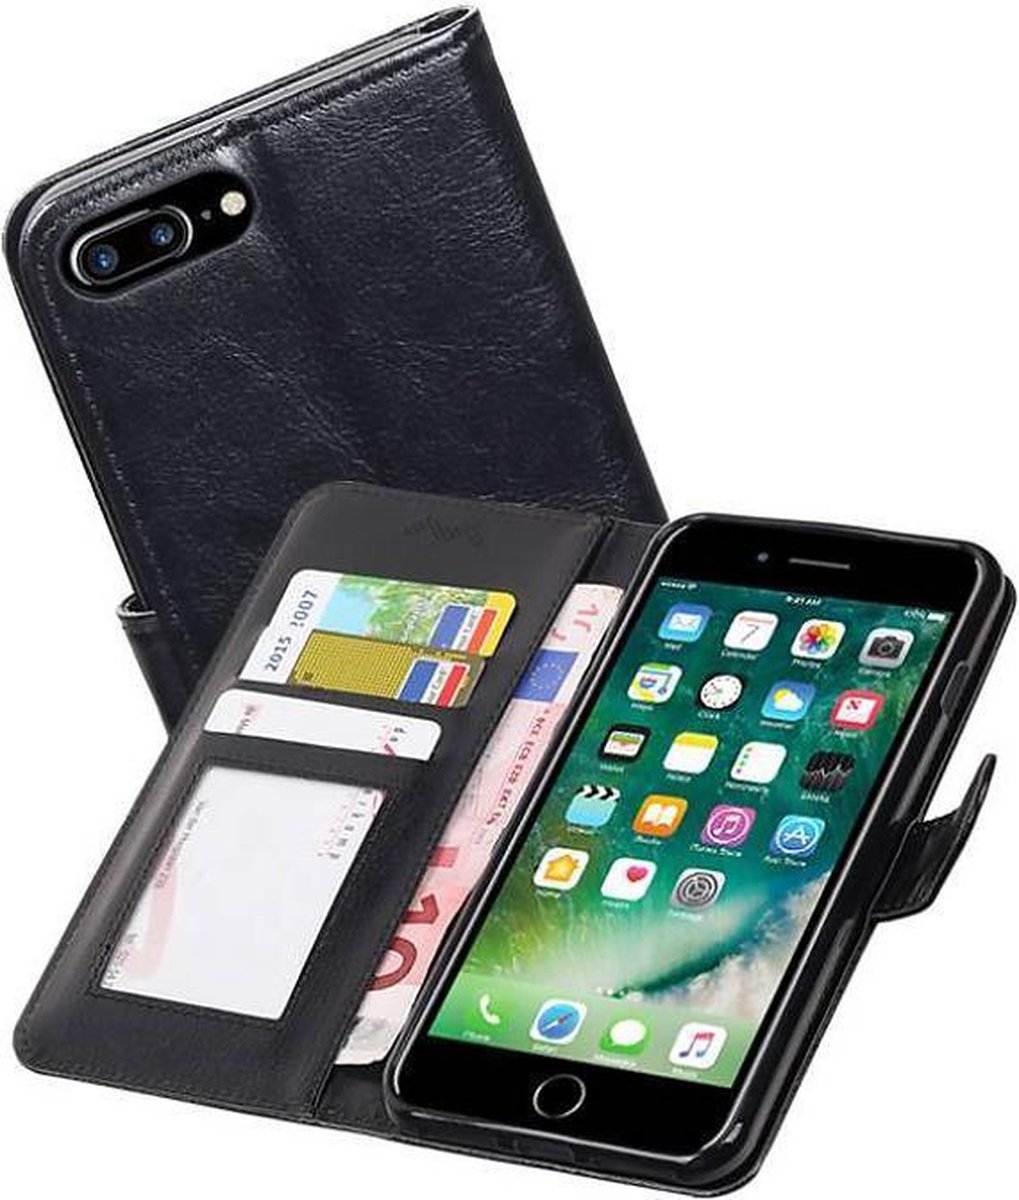 Apple iPhone 7 Plus / 8 Plus Portemonnee Hoesje Booktype Wallet Case Zwart - Merkloos